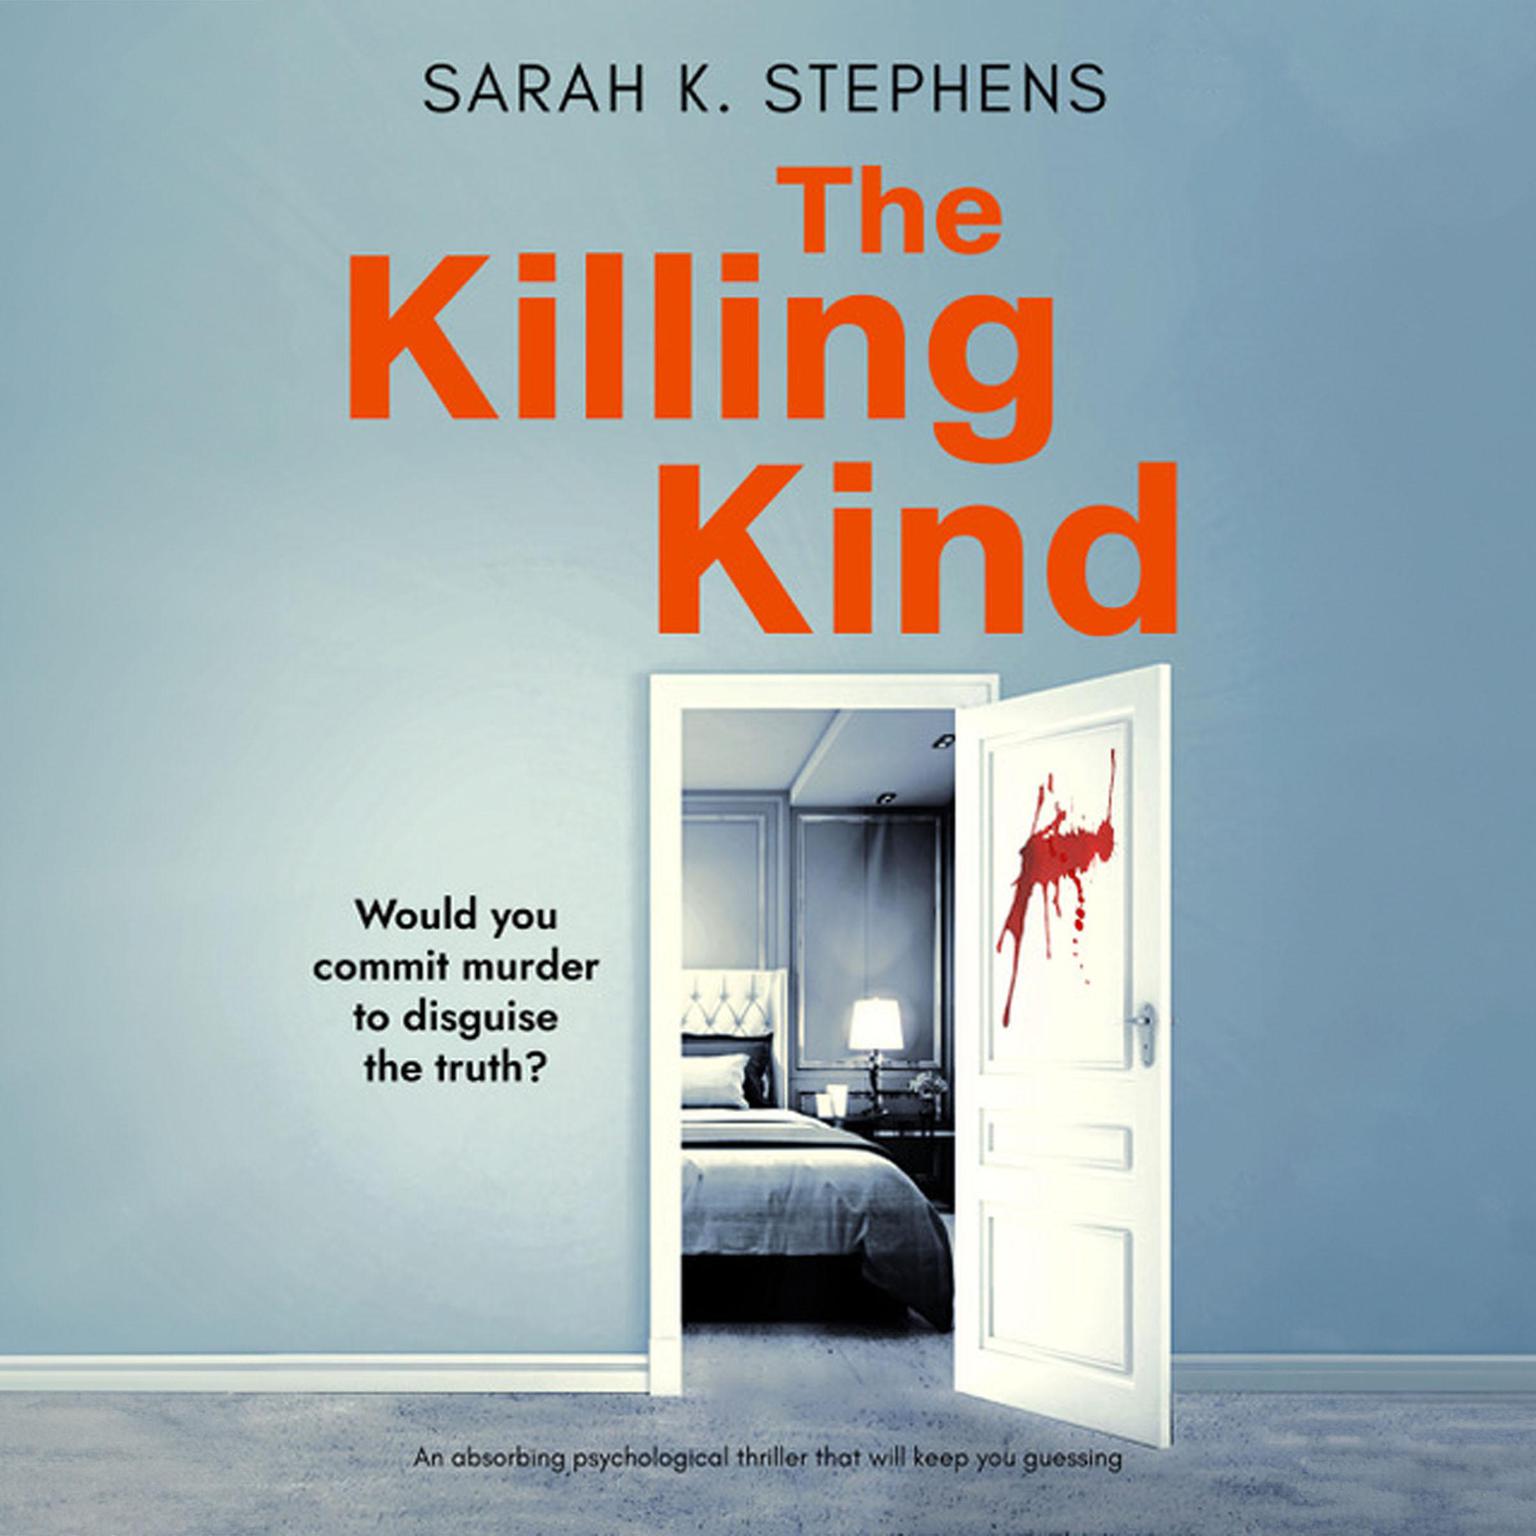 The Killing Kind Audiobook, by Sarah K. Stephens